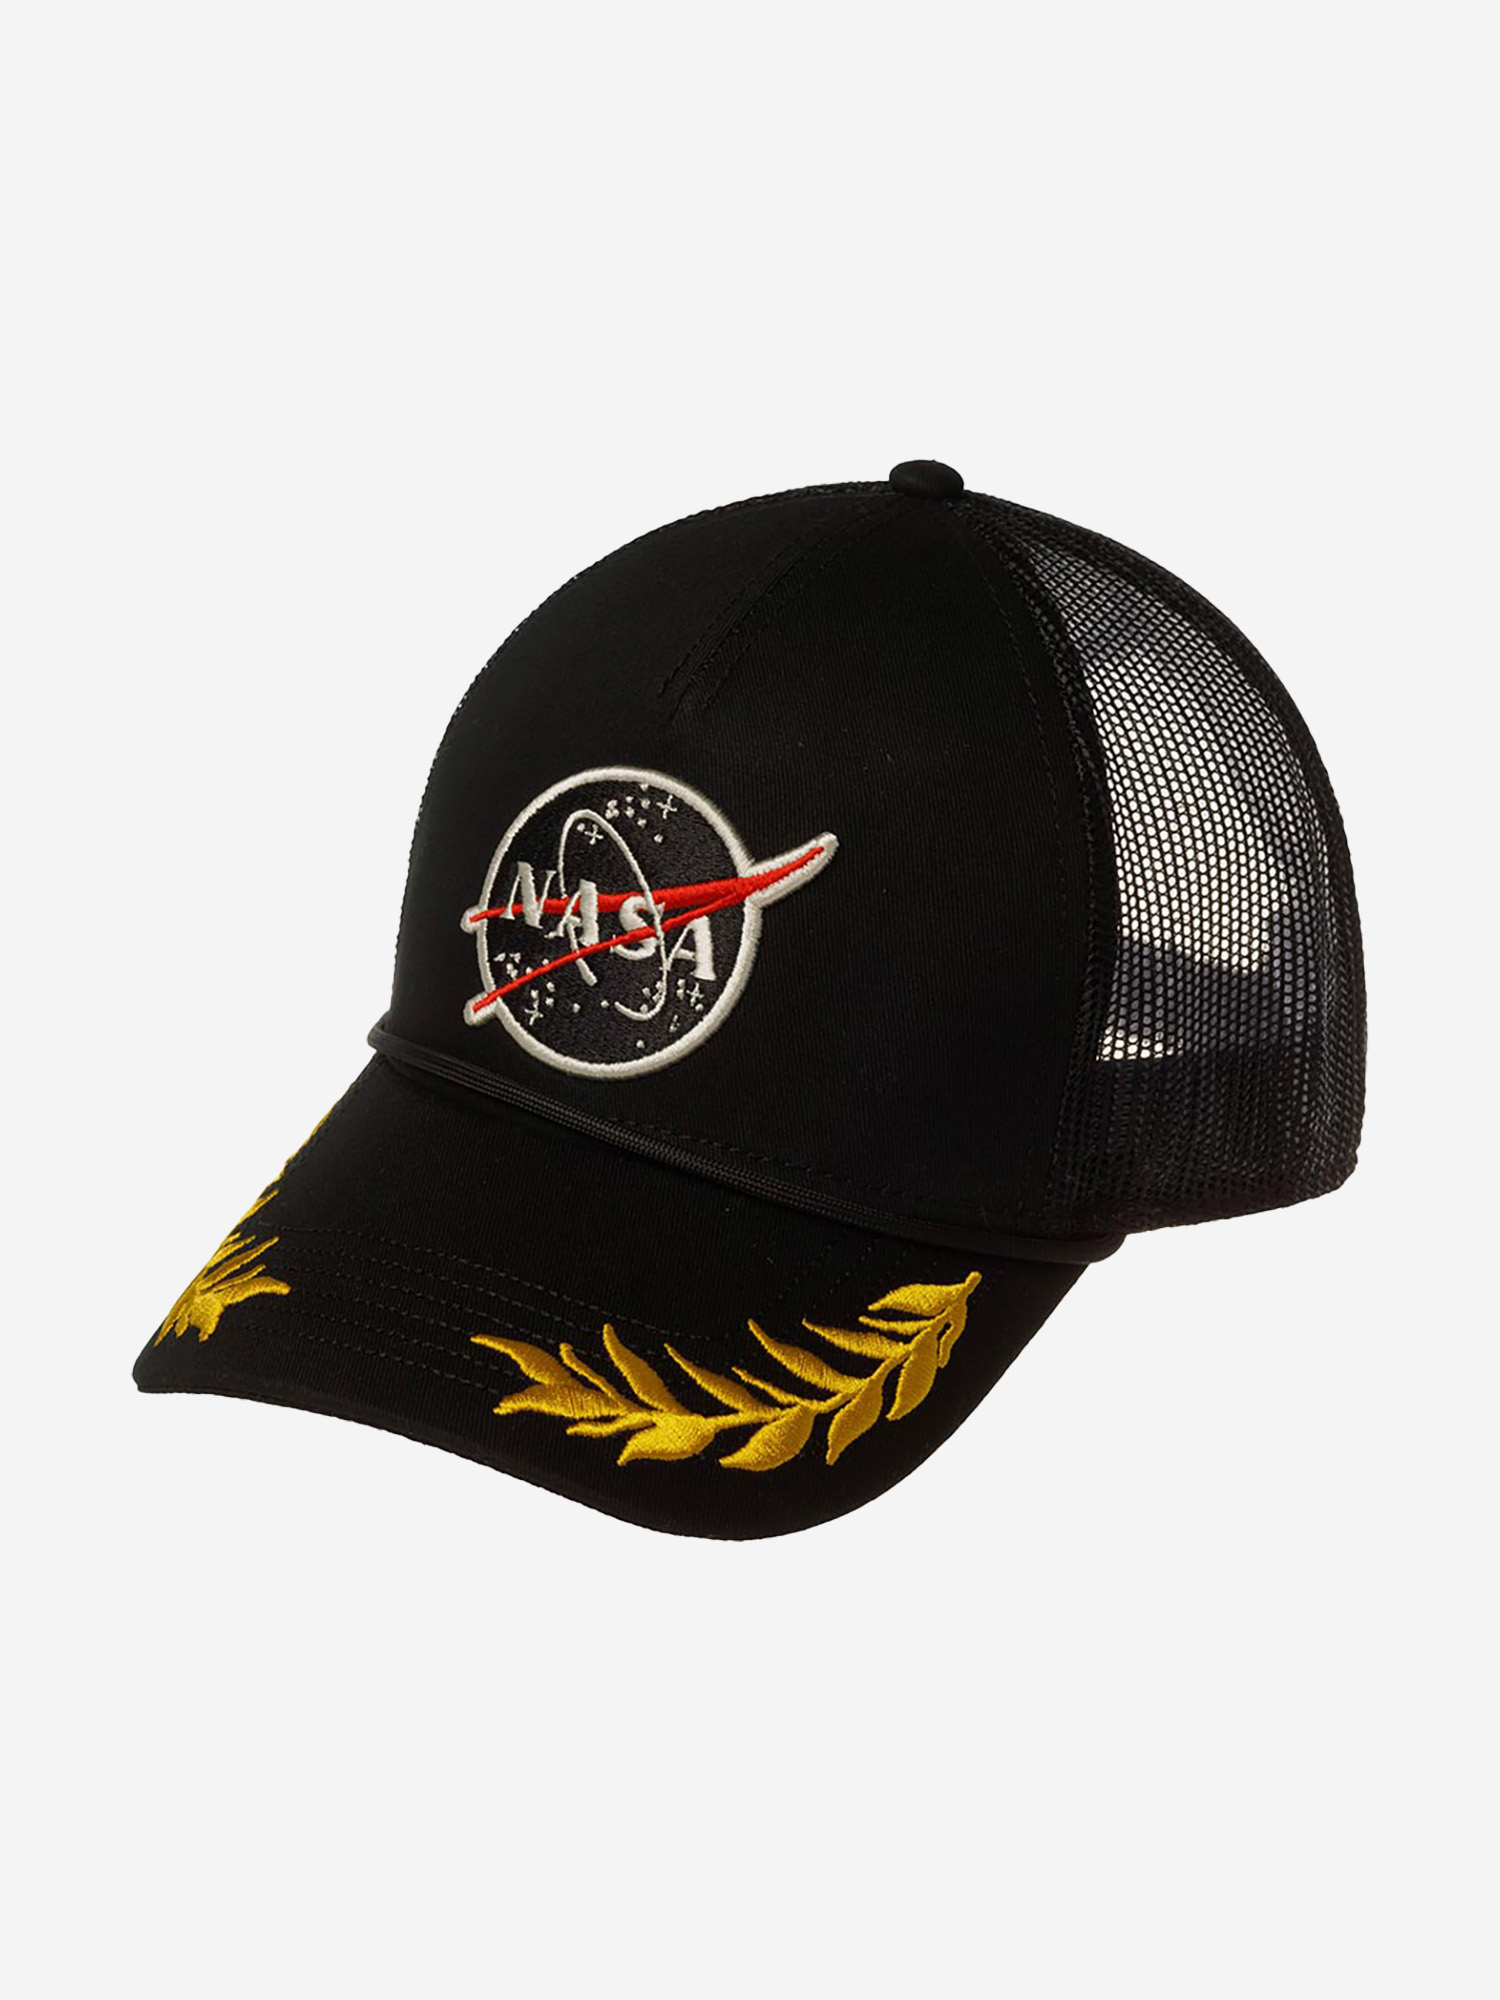 Бейсболка AMERICAN NEEDLE 45030A-NASA Space with NASA General (черный), Черный бейсболки cl nasa 1 nas5 nasa